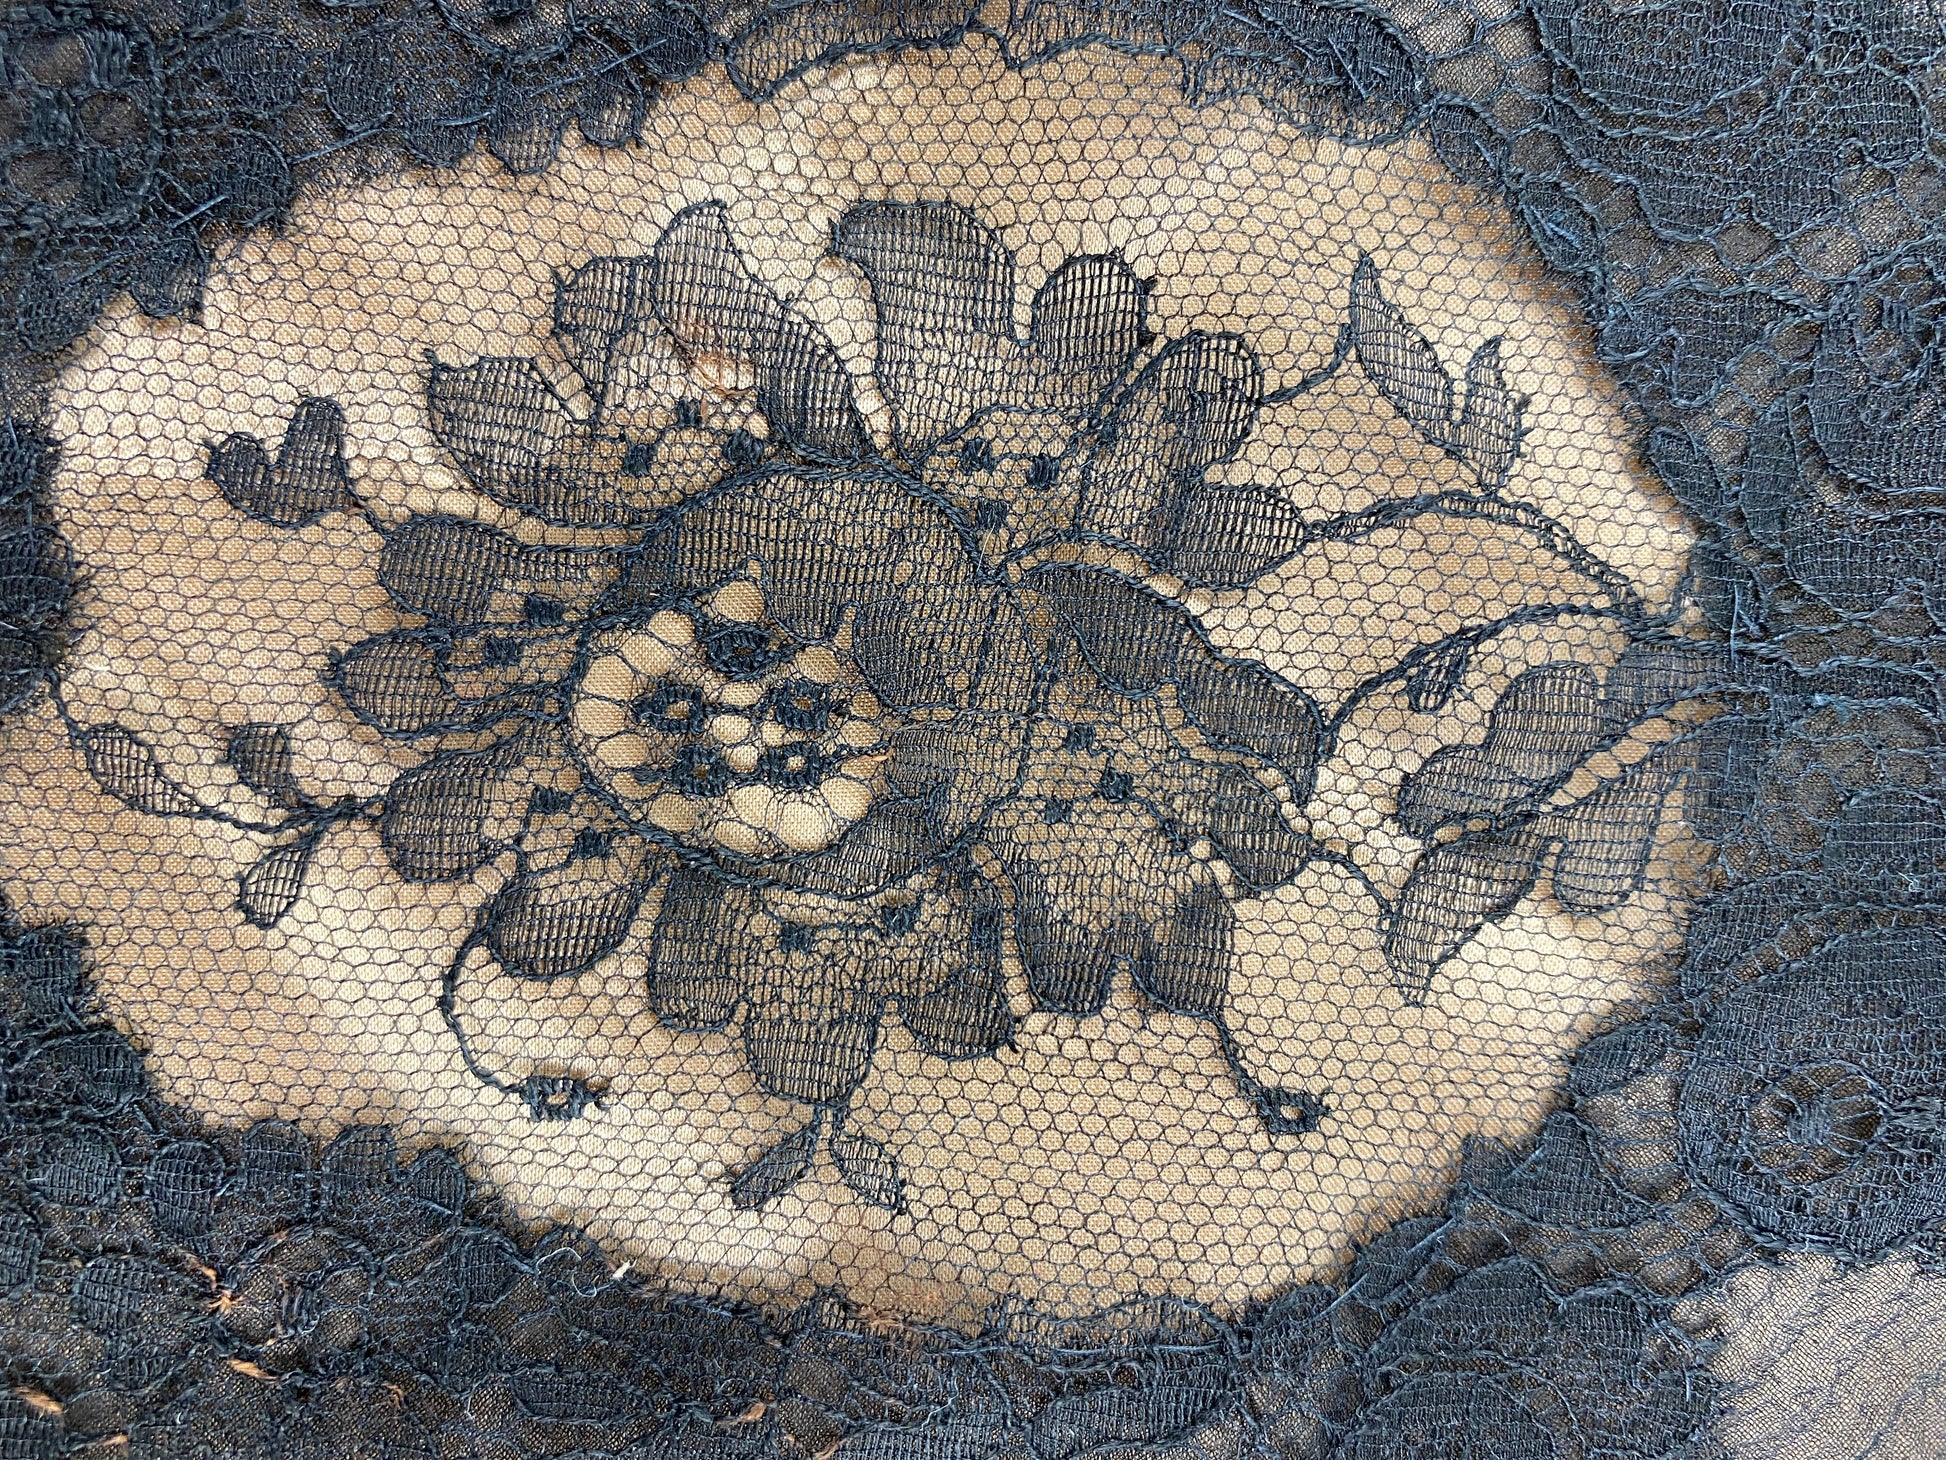 Antique Black Silk Chiffon & Lace Mourning Handkerchief